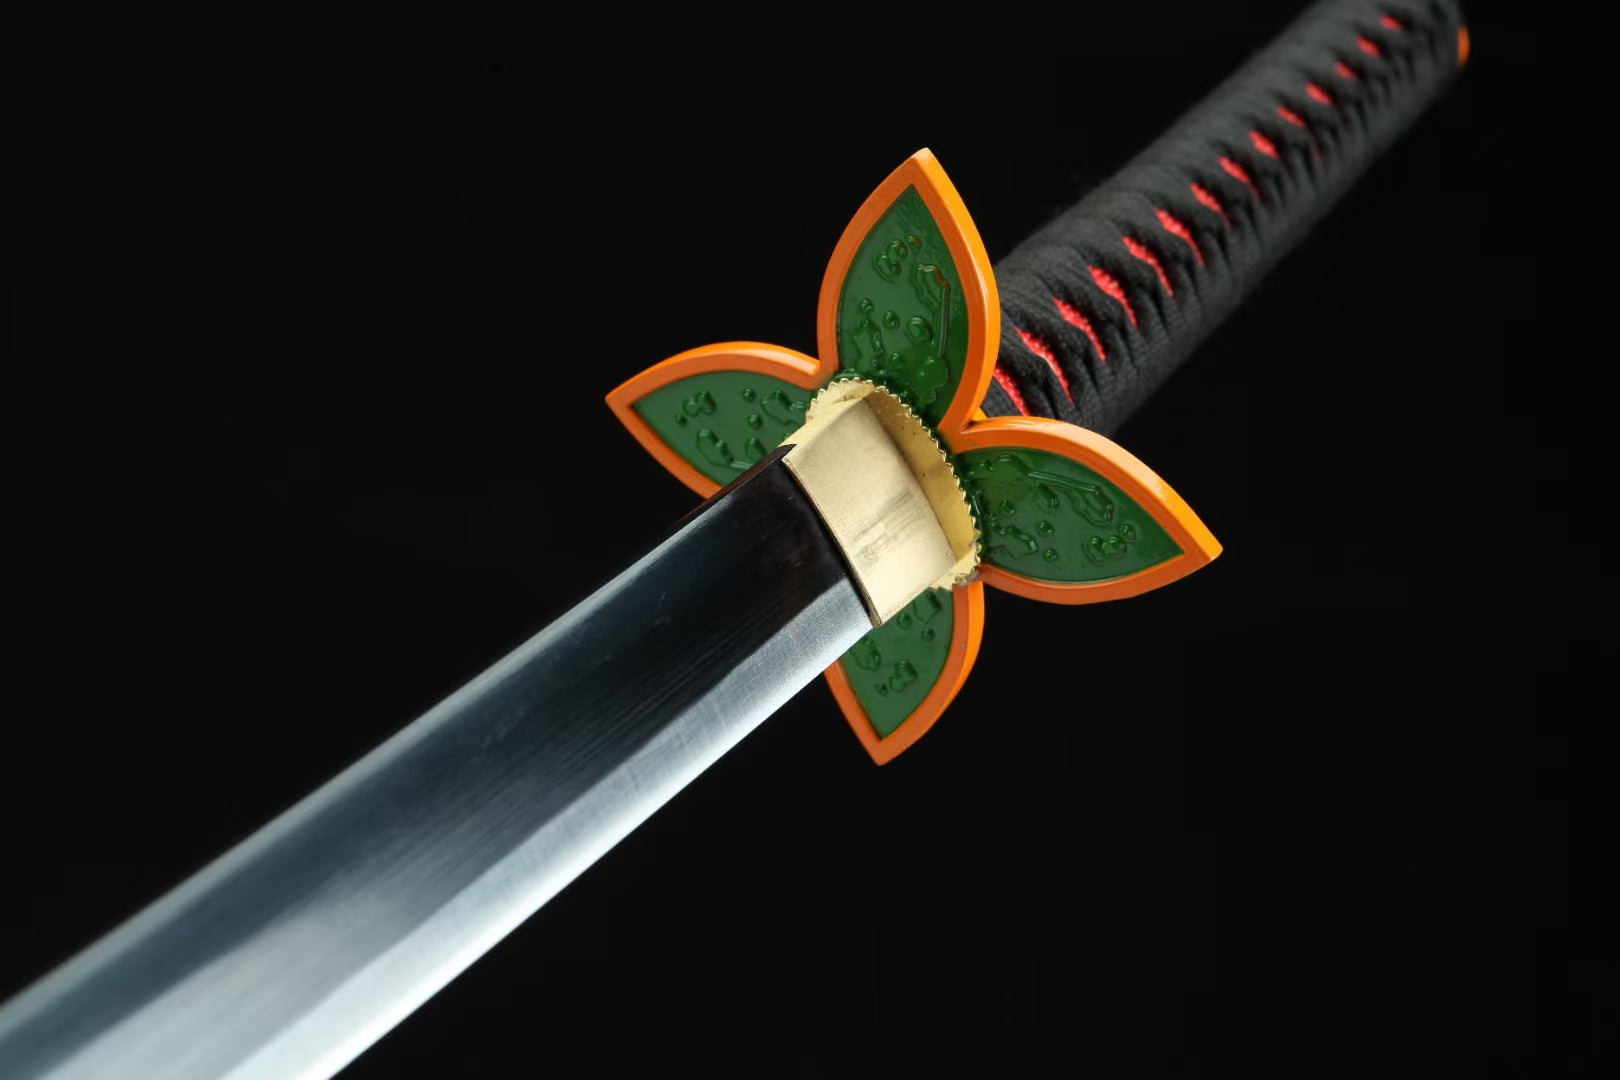 shinobu sword real,1045 carbon steel katana,demon slayer sword,comic sword hansi sword